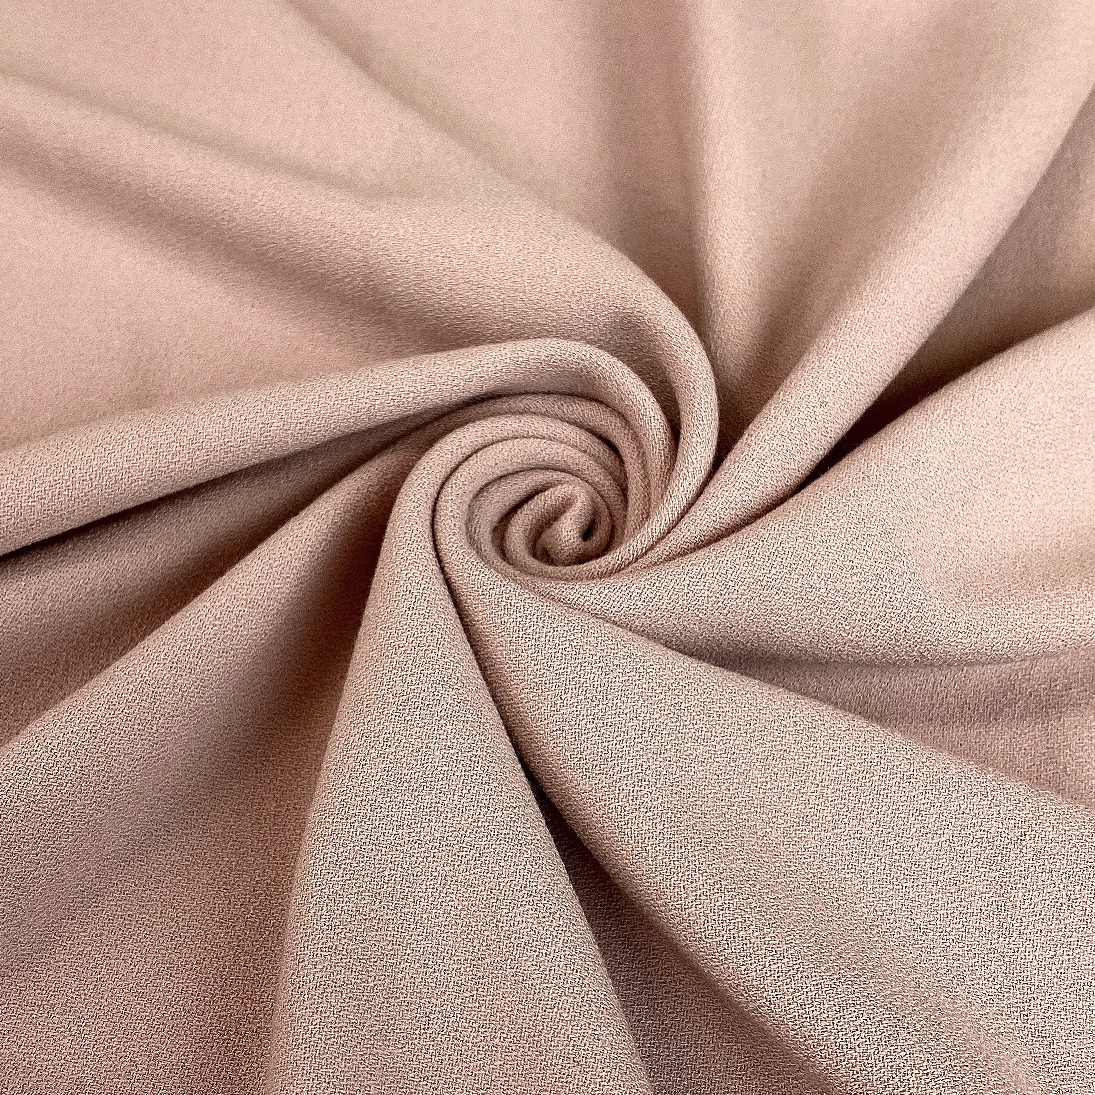 Italian Crepe Stretch Dressmaking Fabric - Blush Pink